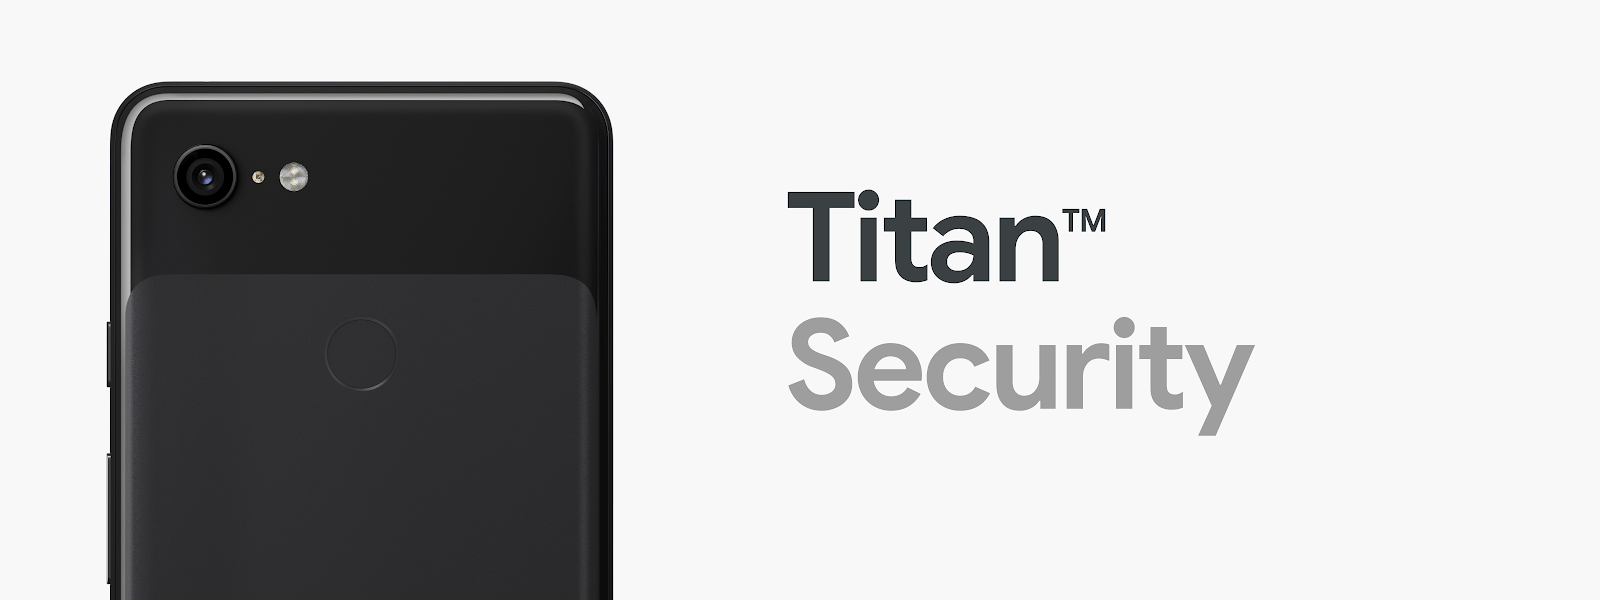 Google Pixel 3 Logo - Titan M makes Pixel 3 our most secure phone yet